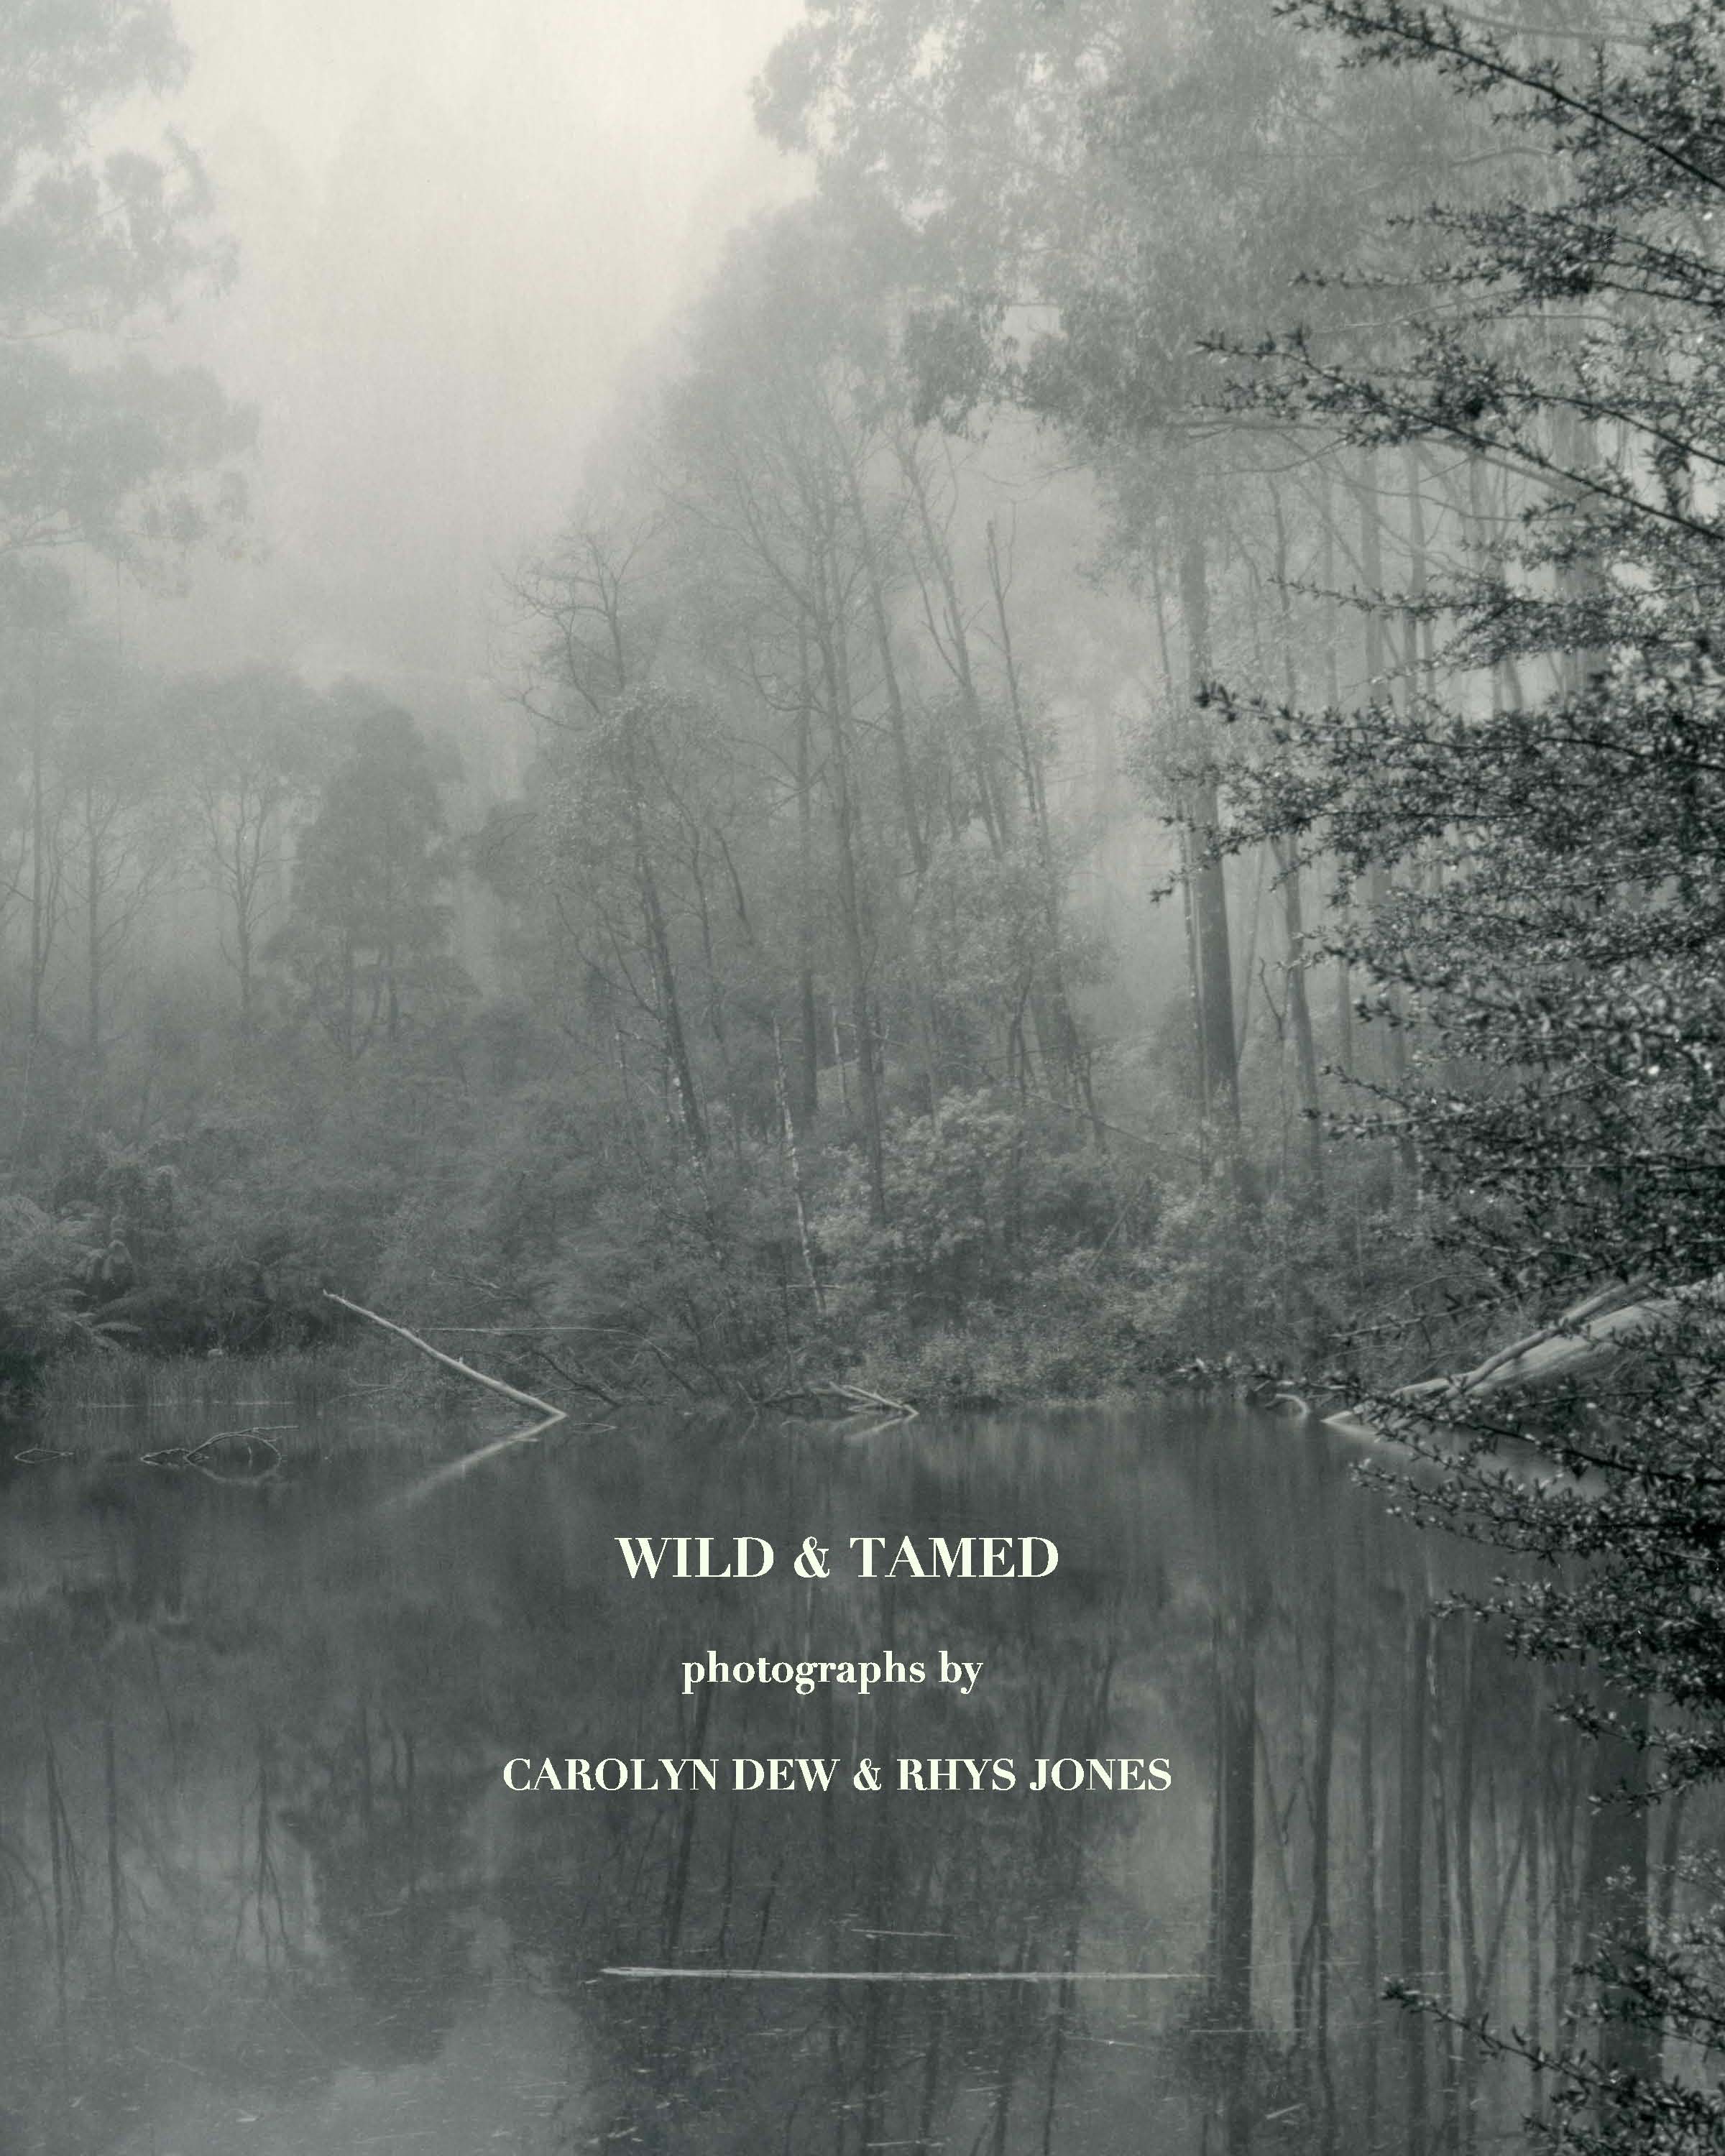 Wild & Tamed